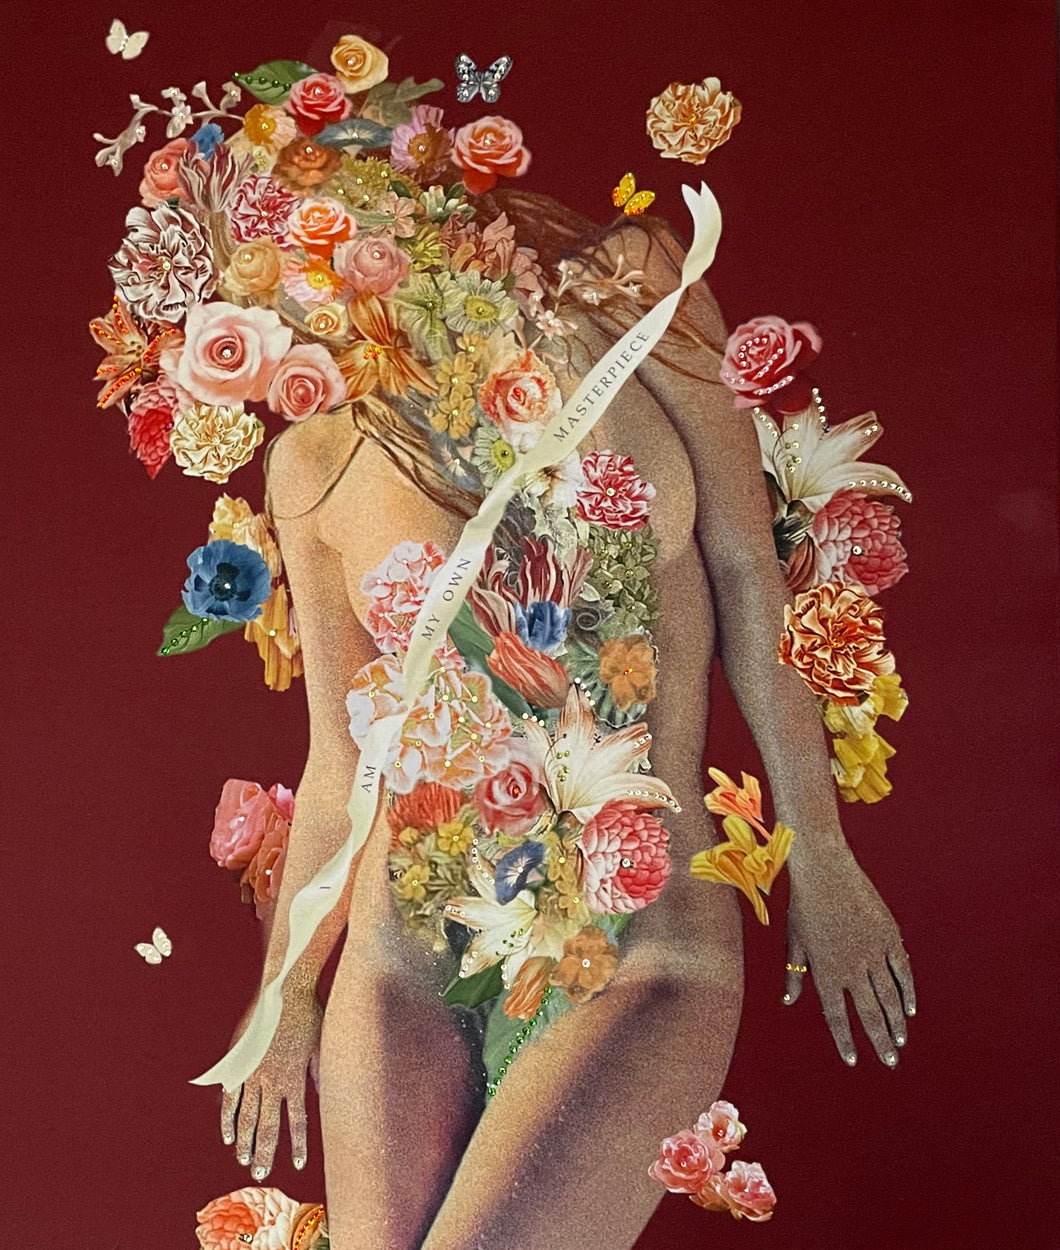 STEPHANIE HIRSCH- I Am My Own Masterpiece